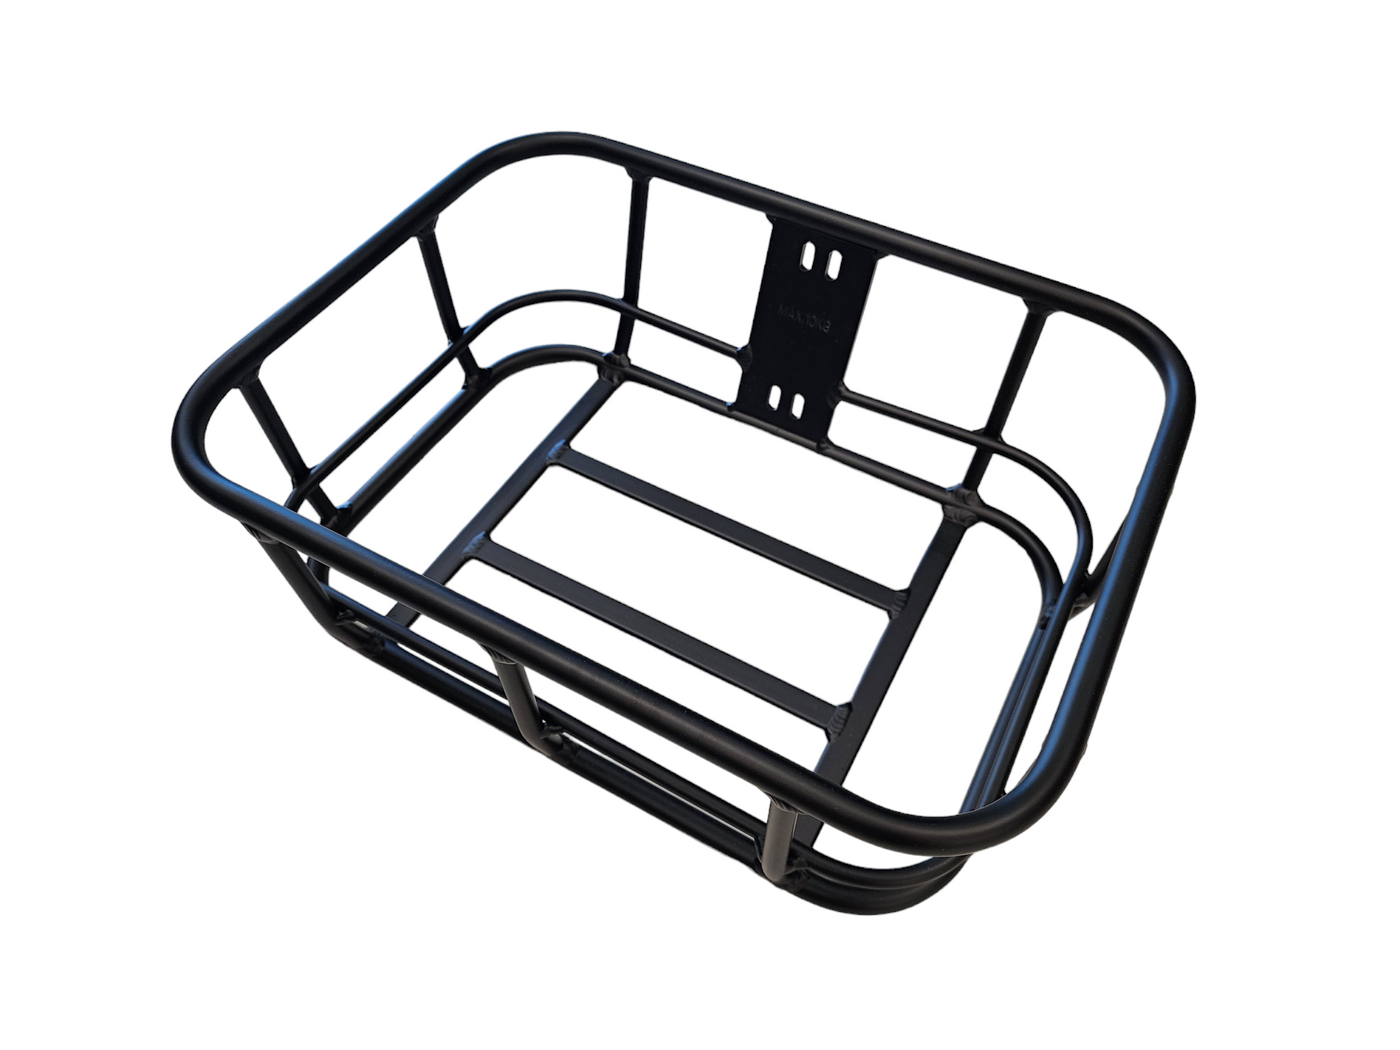 Front Aluminum Basket - Medium size